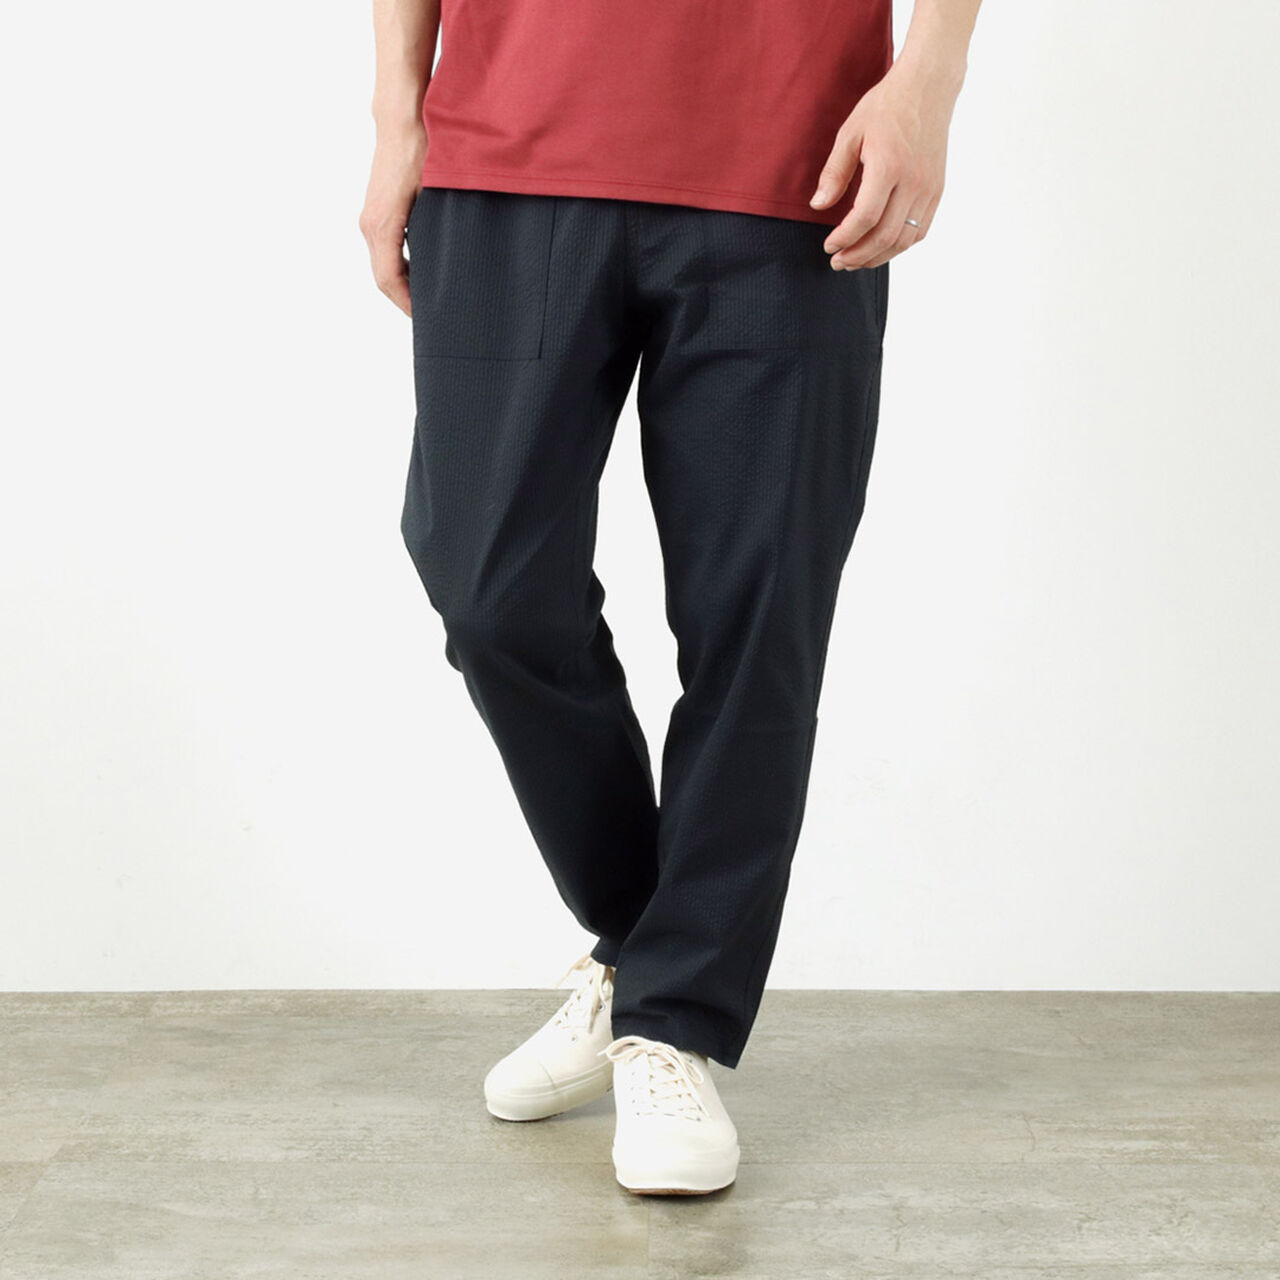 Colour coded COOLMAX seersucker ankle trousers,BlackStripe, large image number 0